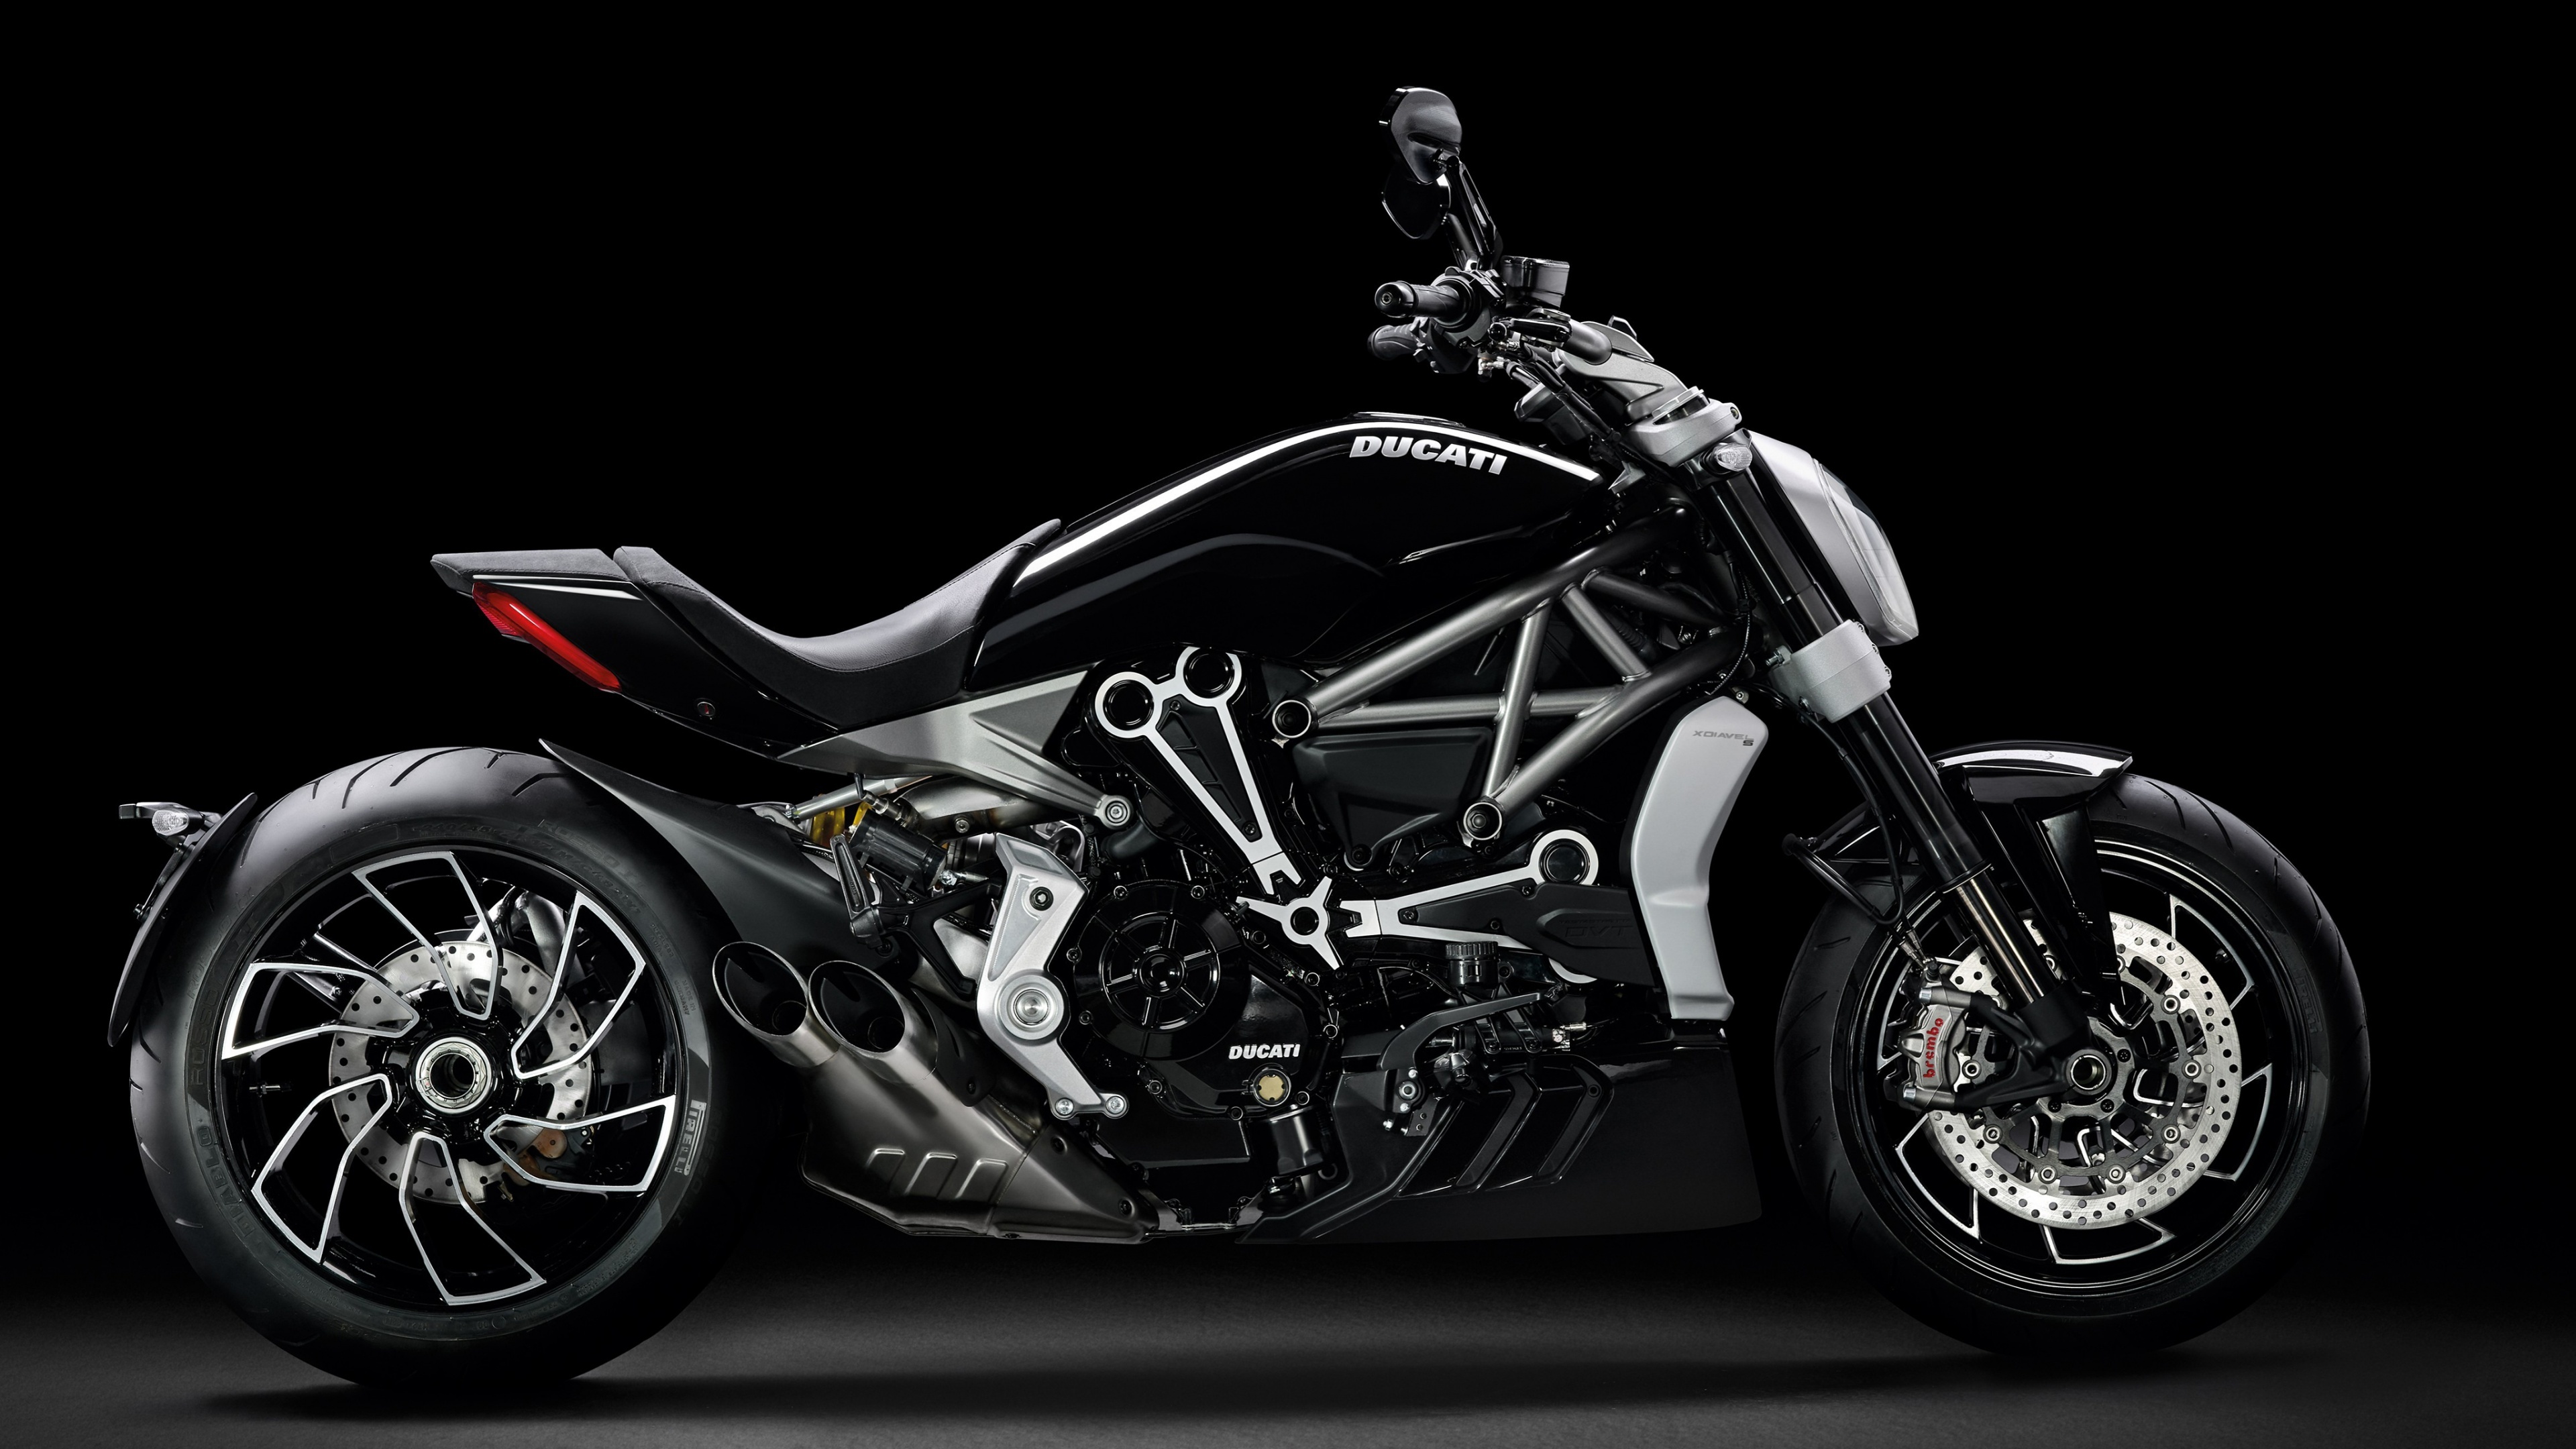 Ducati XDiavel, Dark background, Stylish cruiser motorcycle, Striking design, 3840x2160 4K Desktop